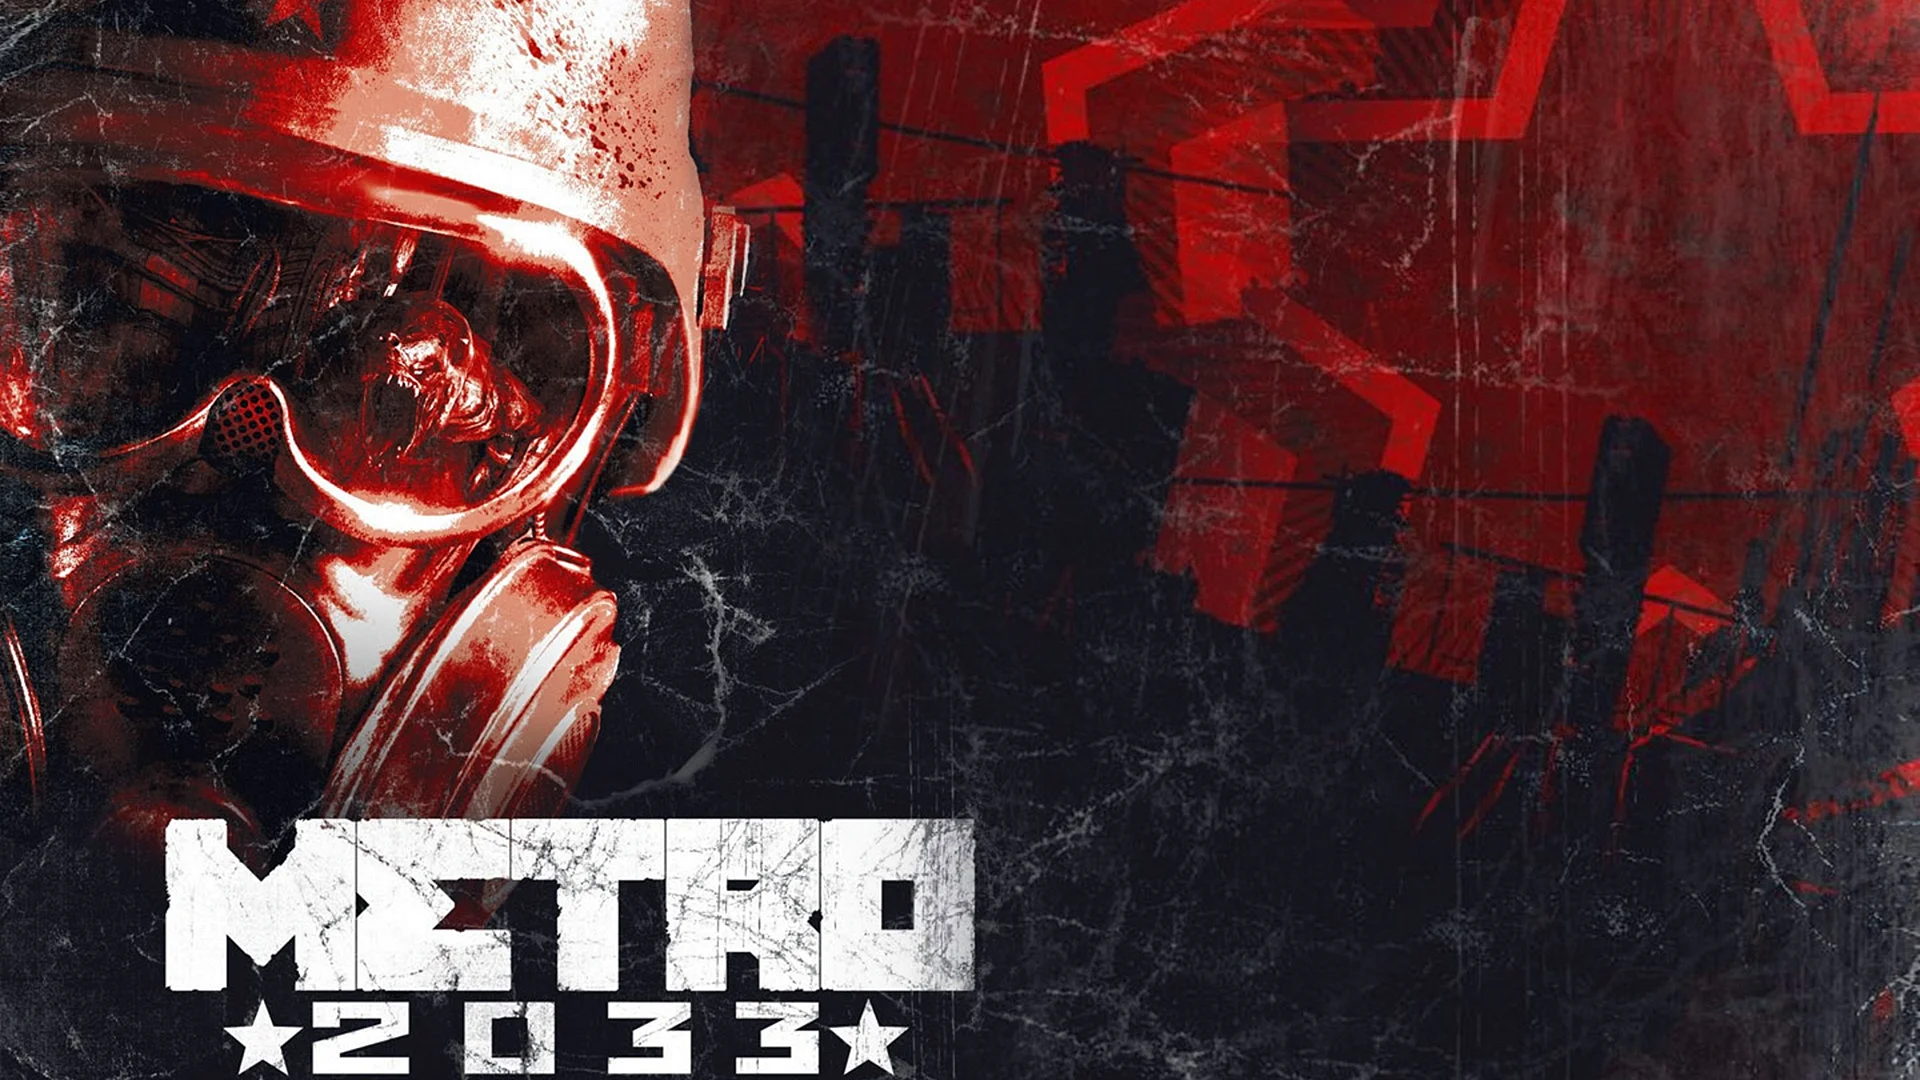 Metro 2033 Wallpaper